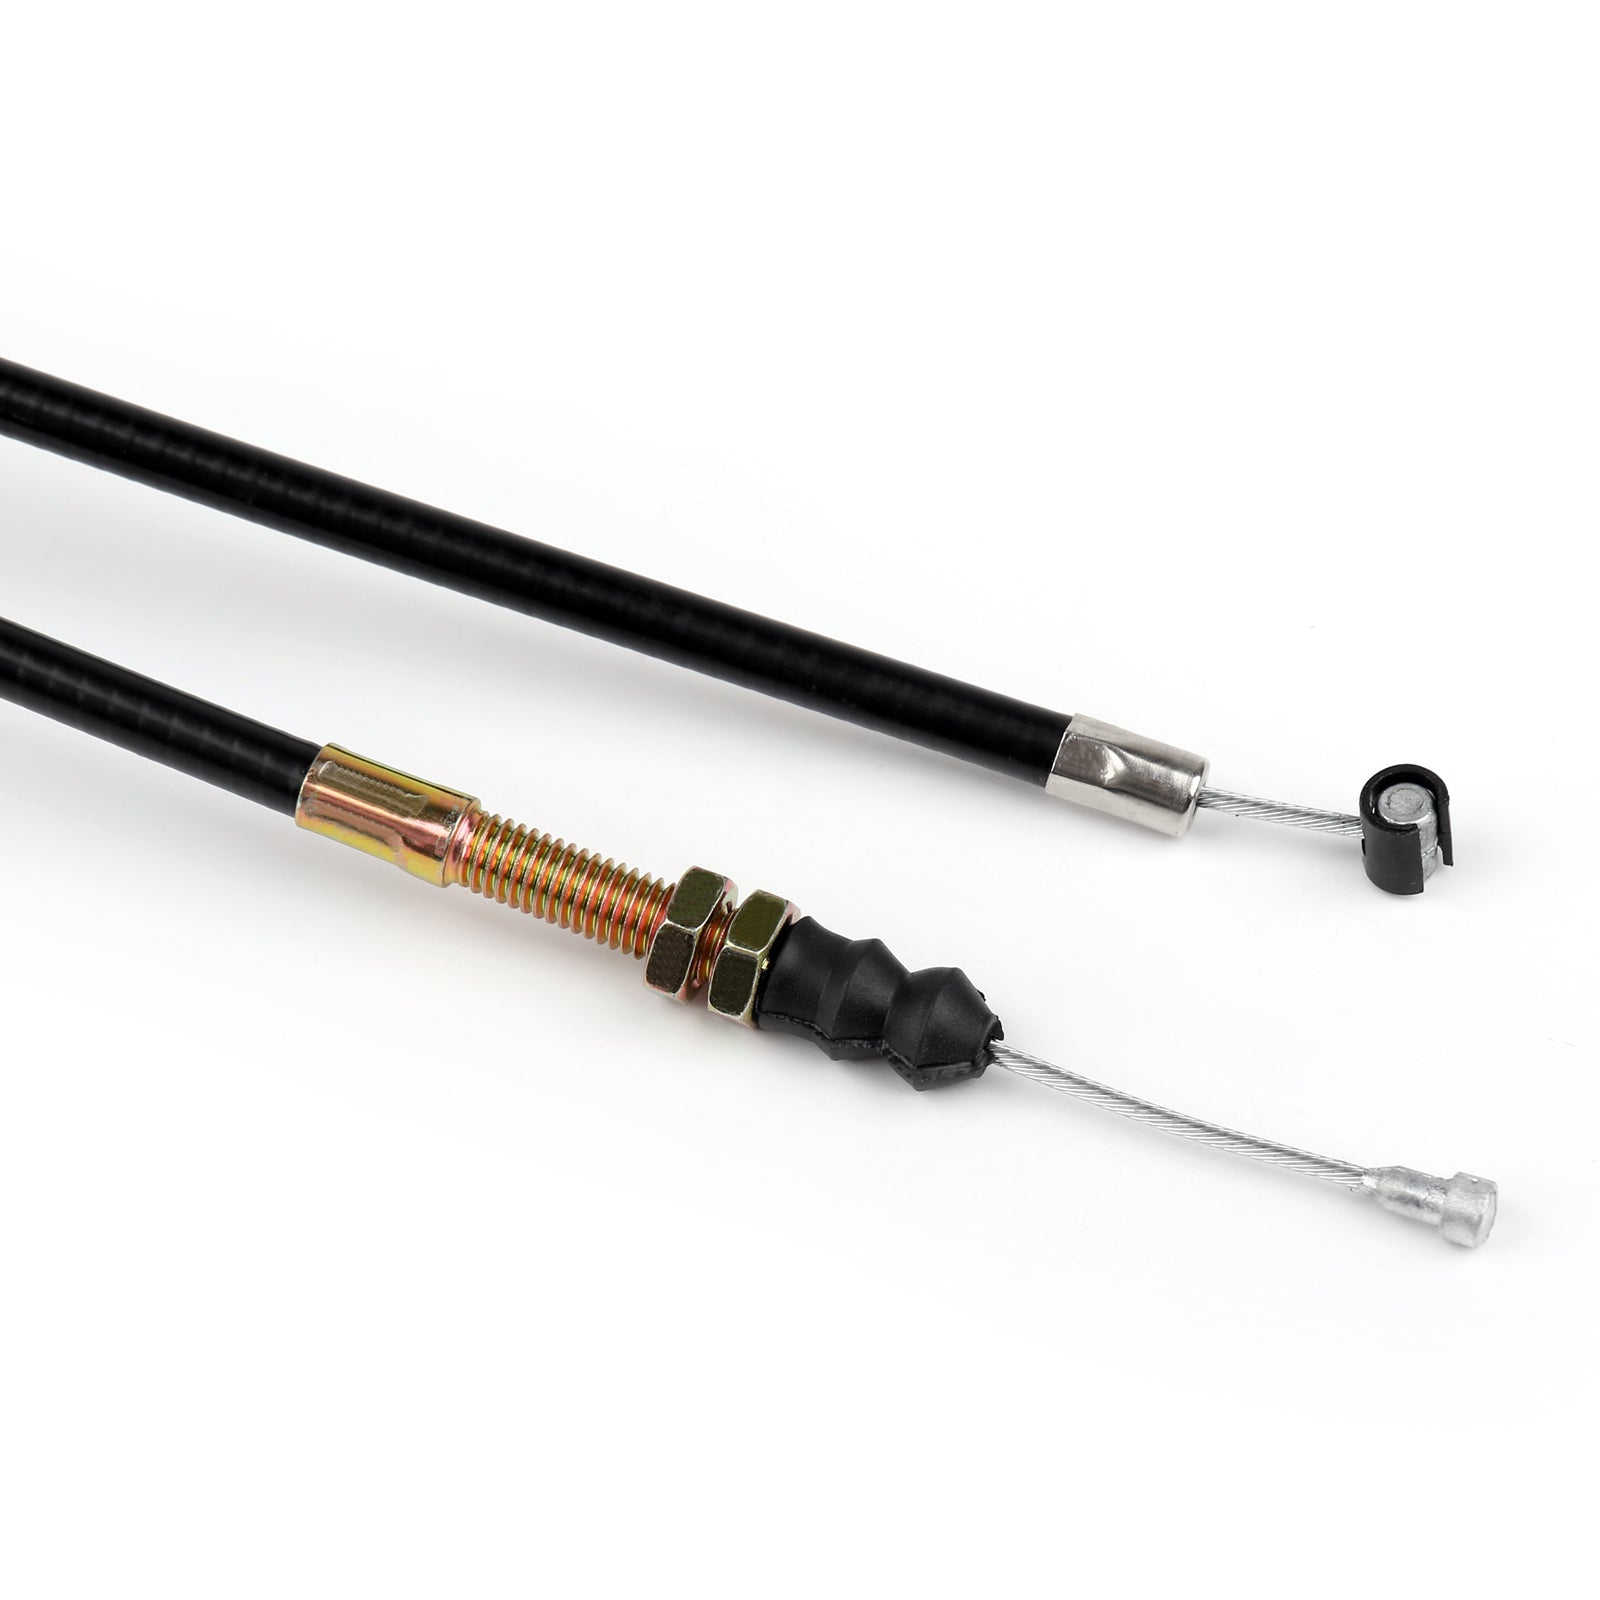 Reemplazo del cable del embrague 54011-1387 para Kawasaki VN400 Vulcan 95-98 VN800 95-06 Genérico